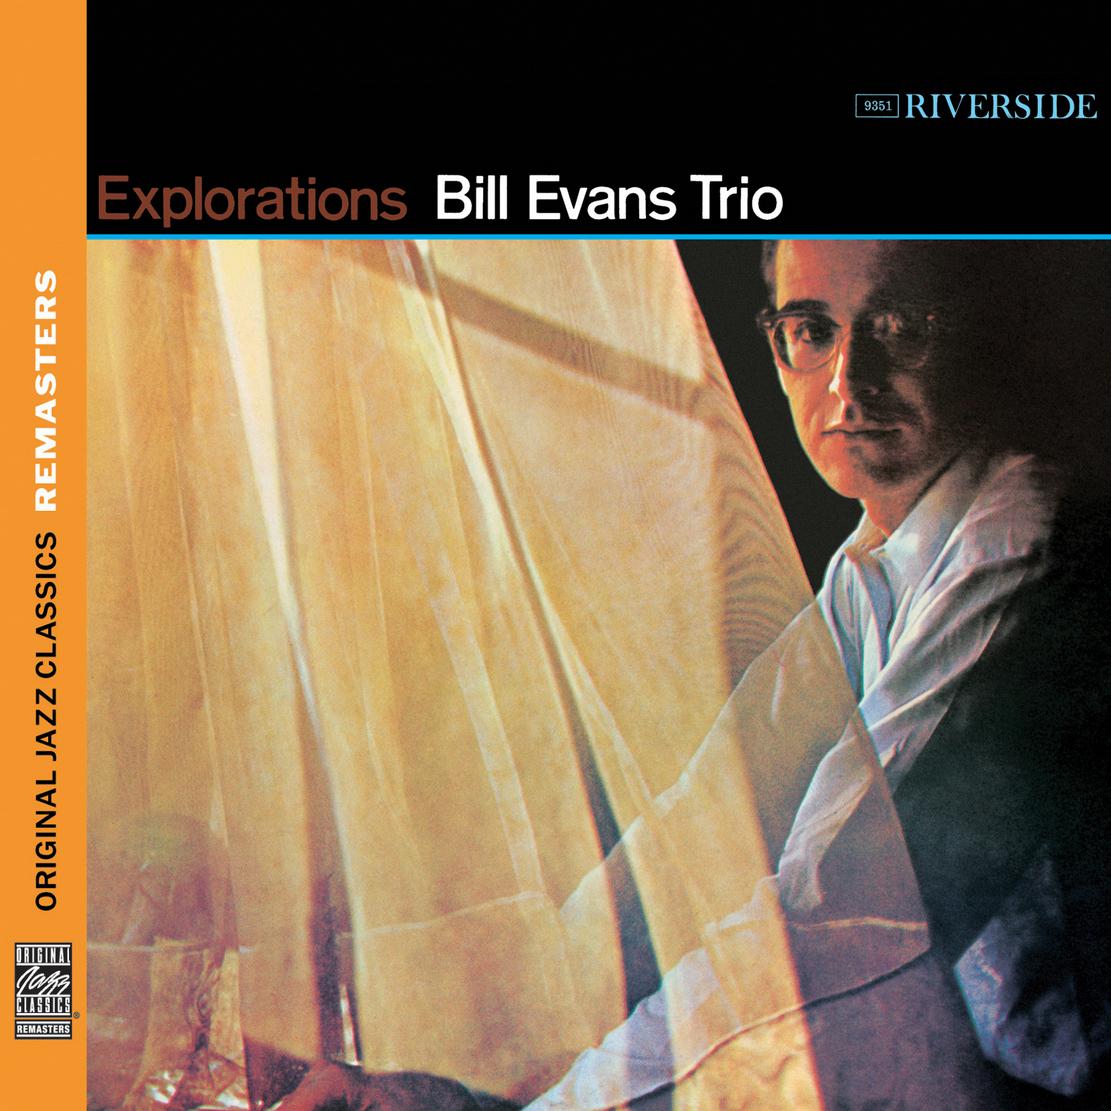 Bill Evans Trio - Explorations (1961/2011) [HDTracks 24bit/88.2kHz]